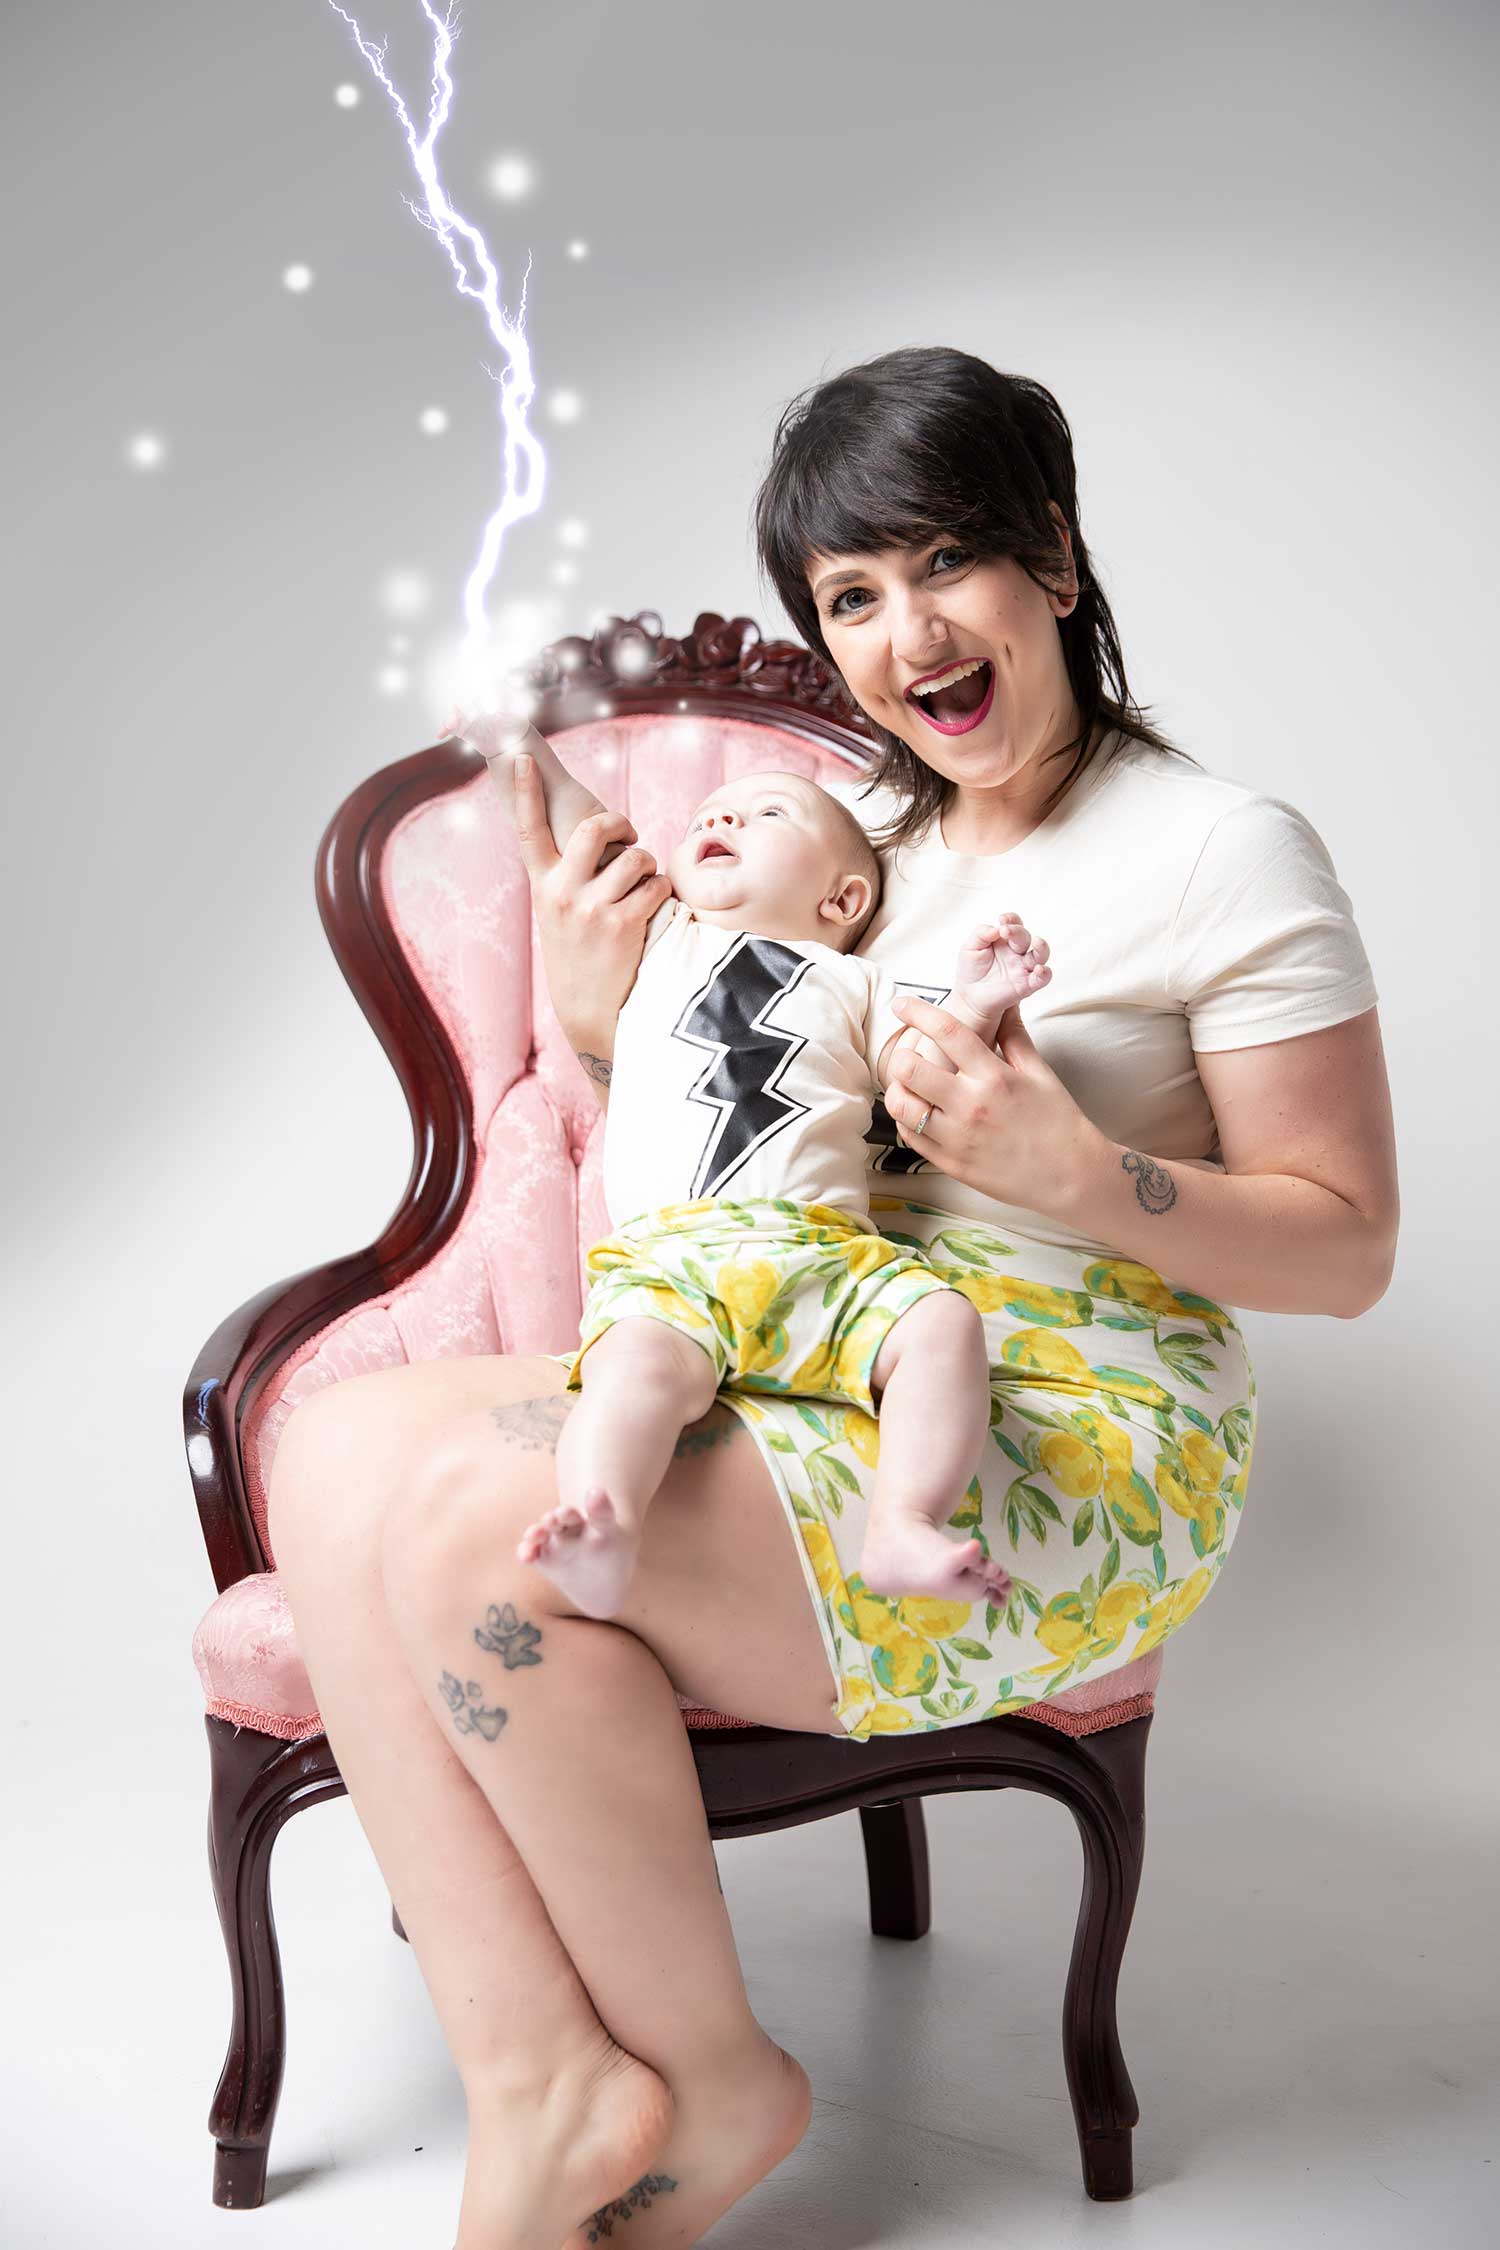 mom and baby wearing matching organic lightning bolt shirts